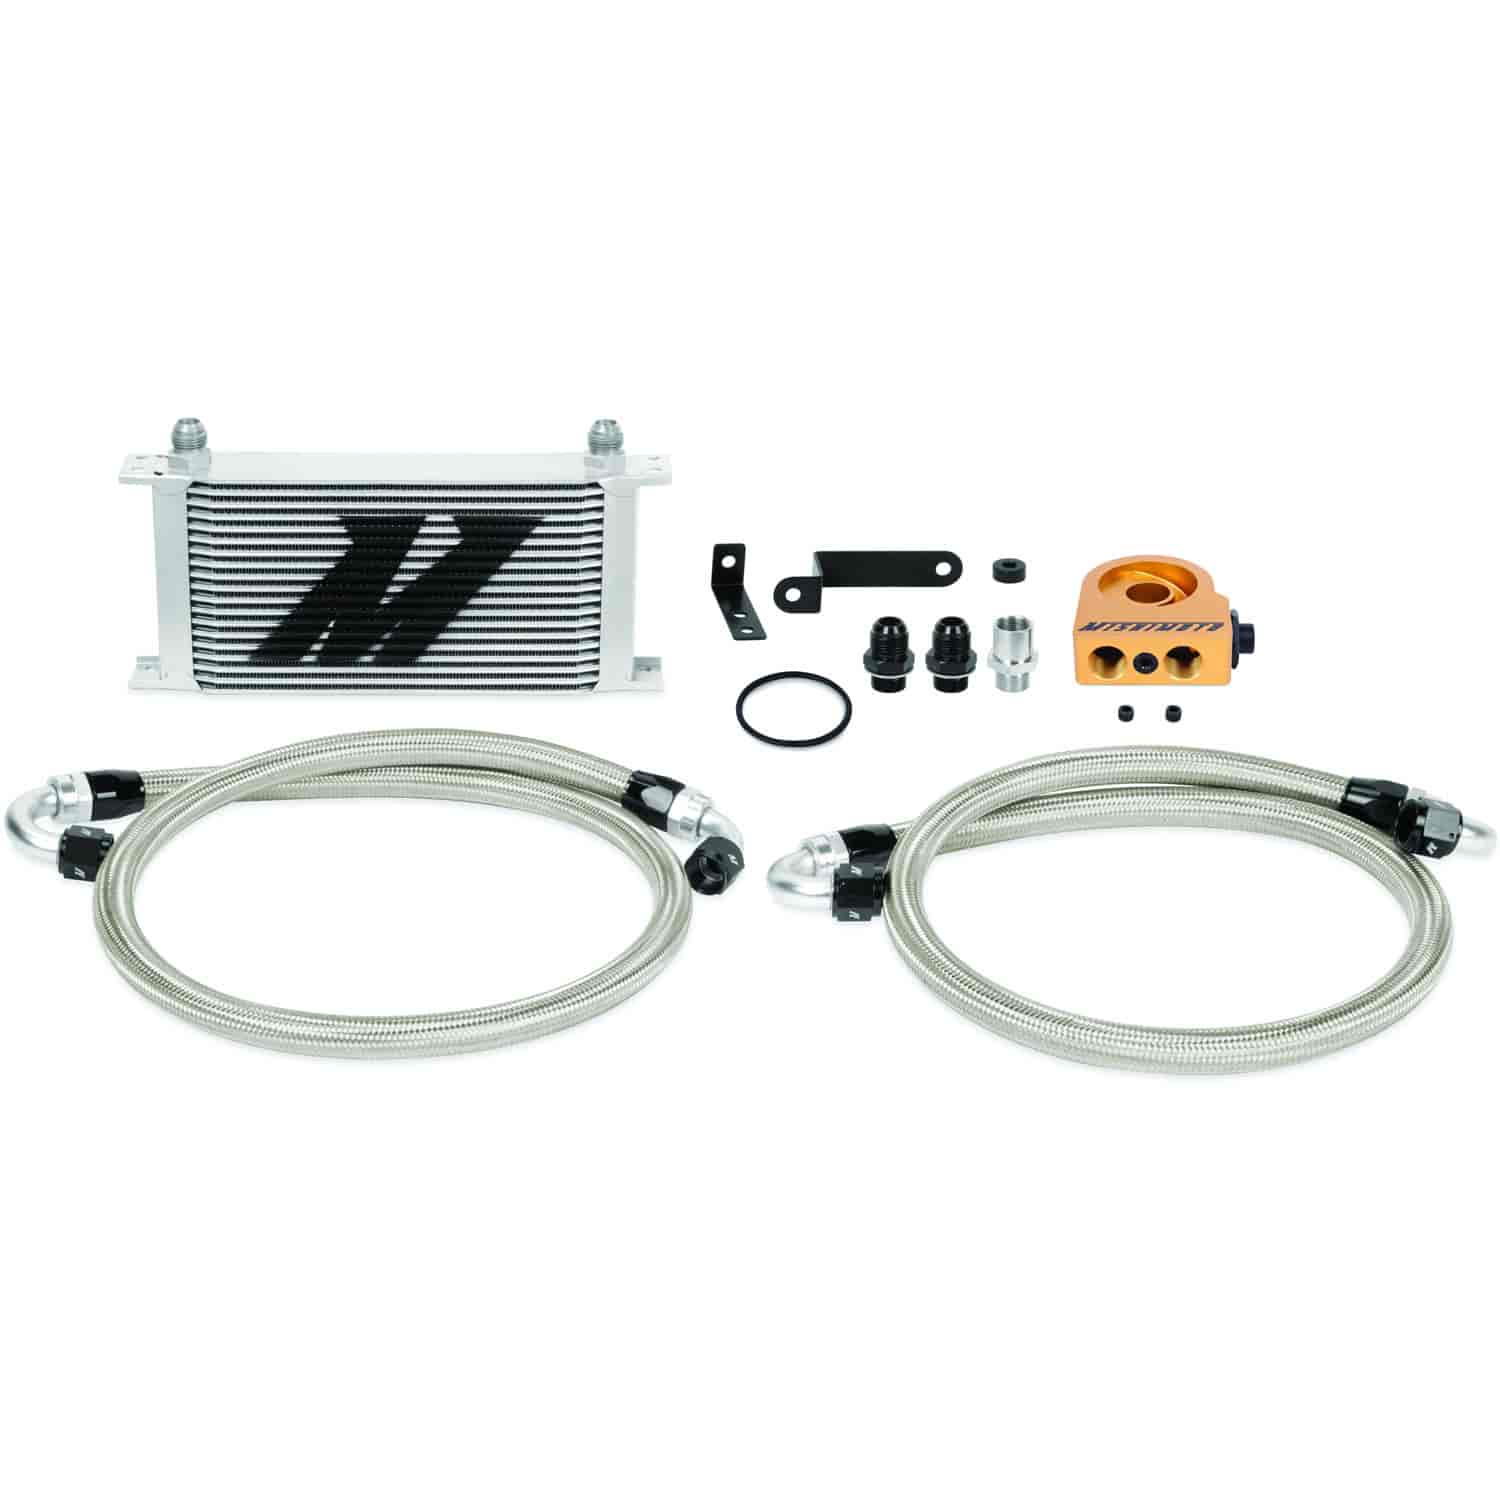 Subaru WRX STI Thermostatic Oil Cooler Kit - MFG Part No. MMOC-STI-08T